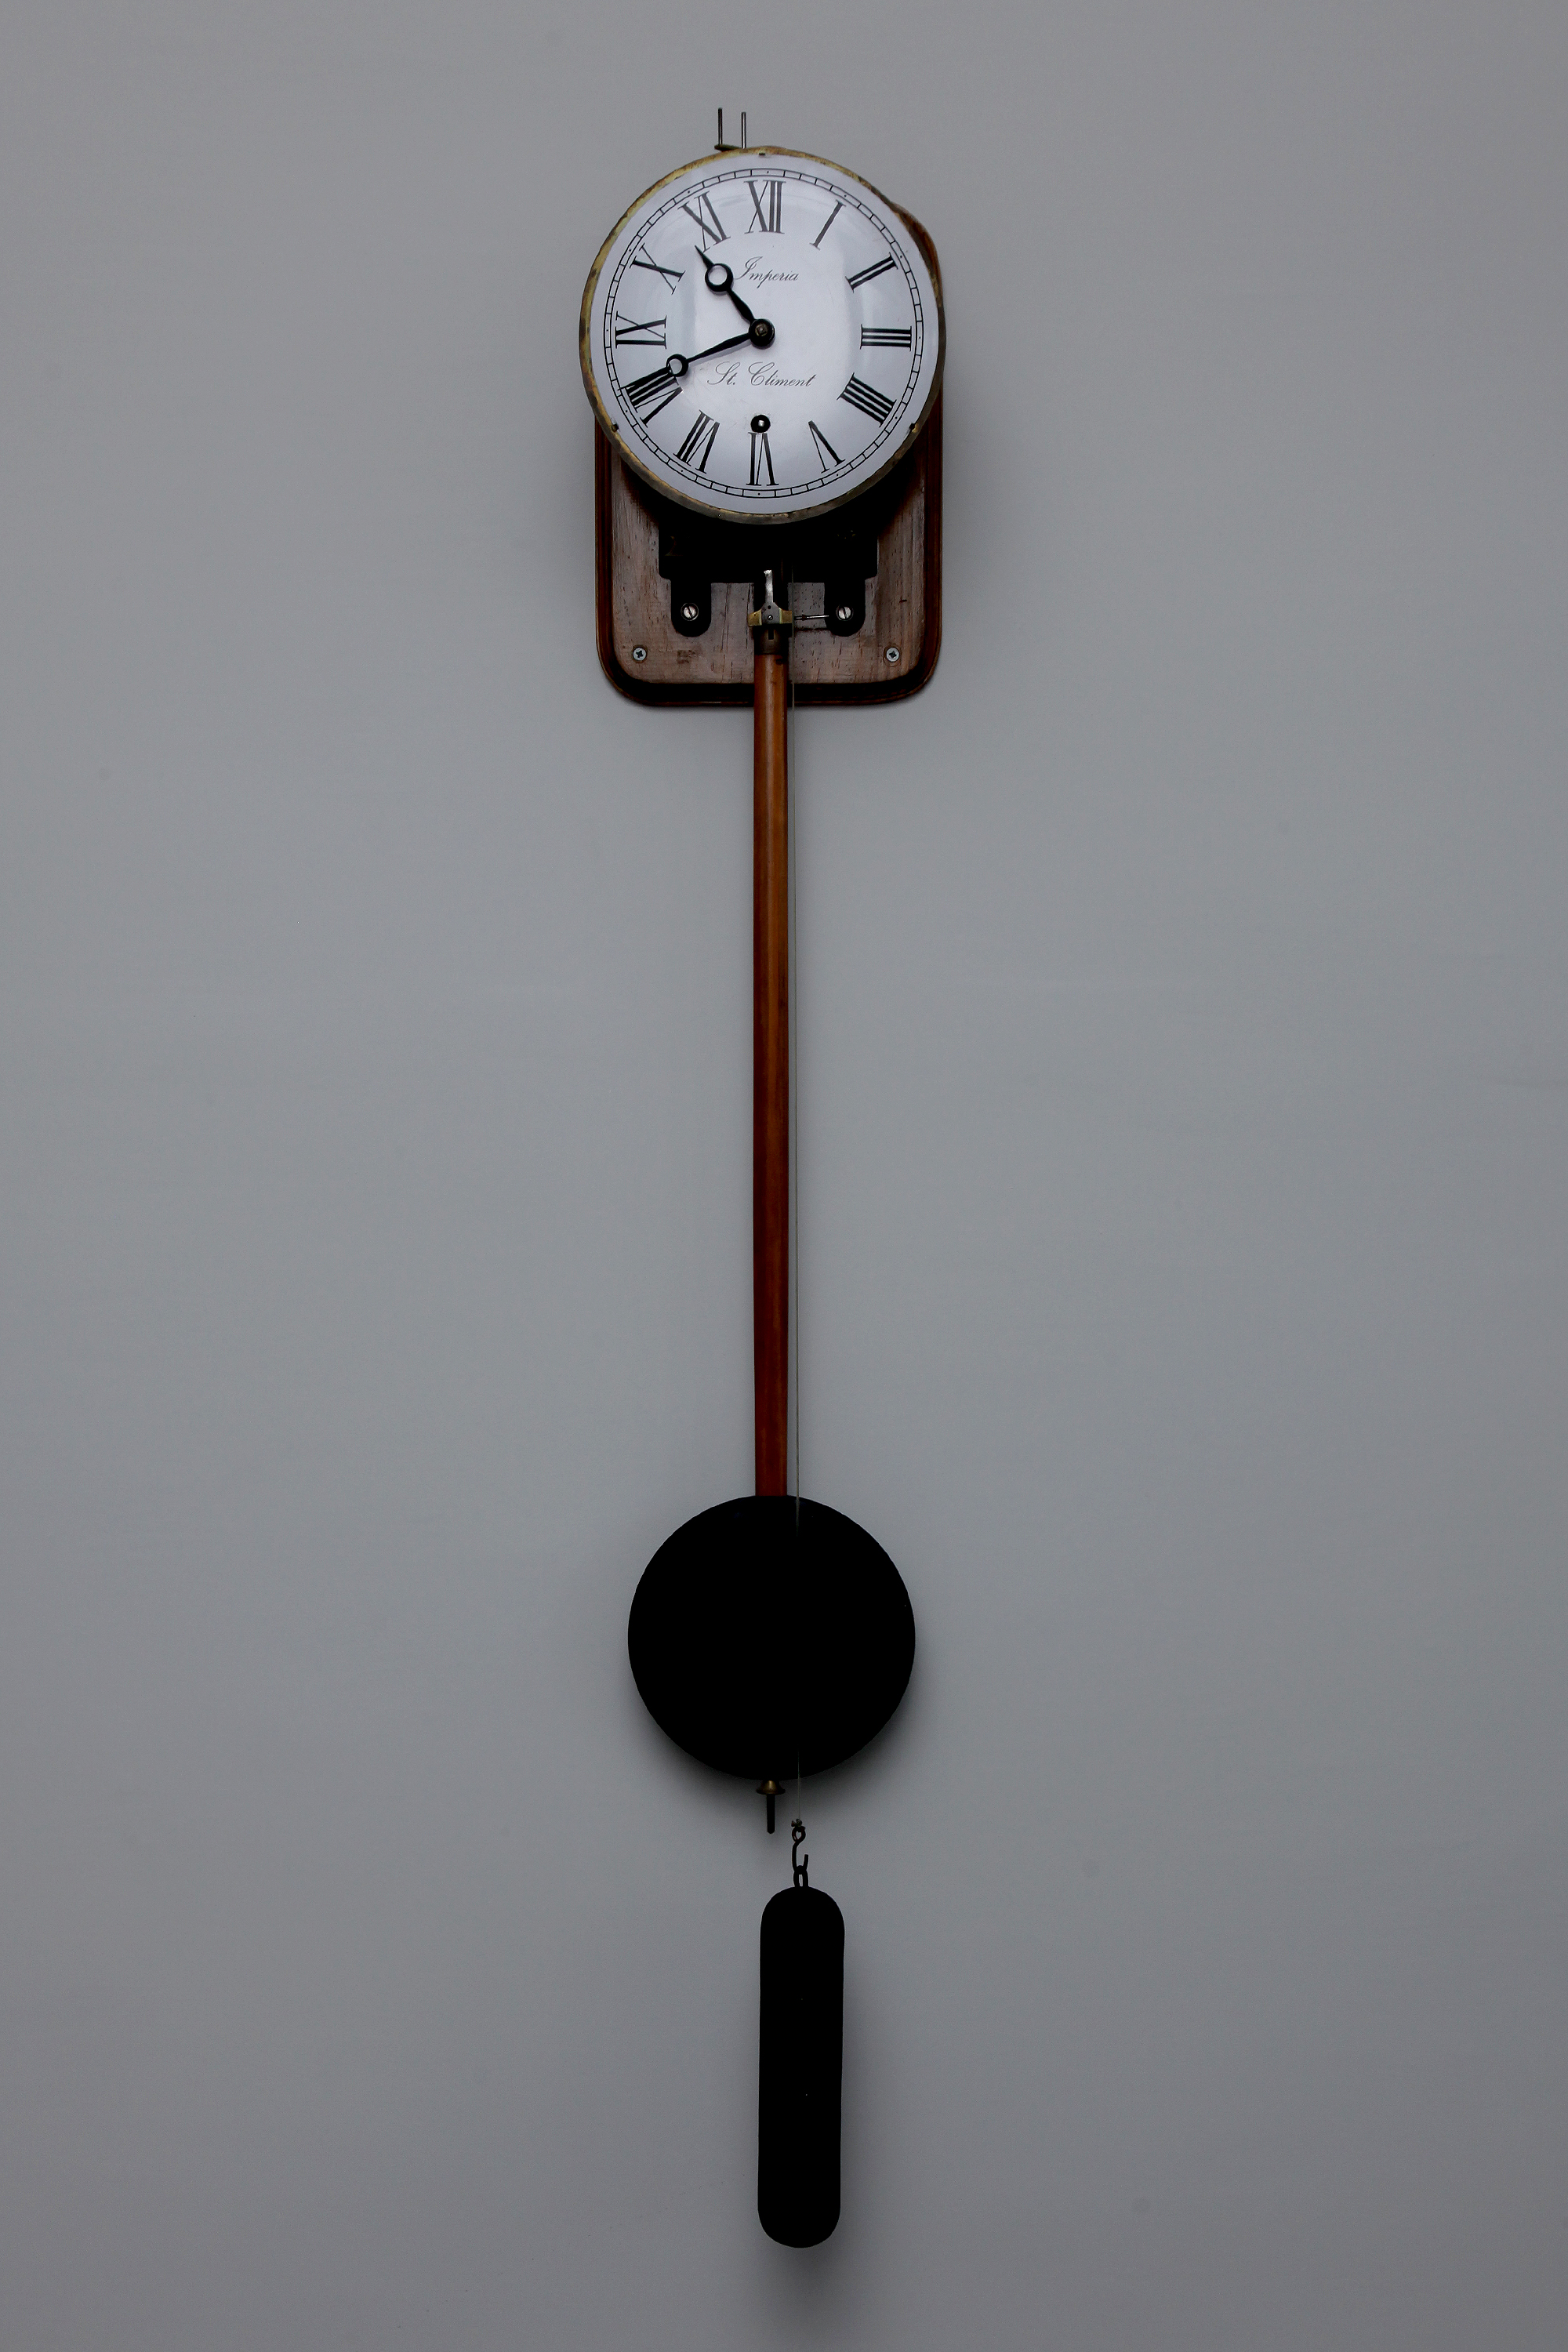 Reloj patrn St. Climent / Imperia